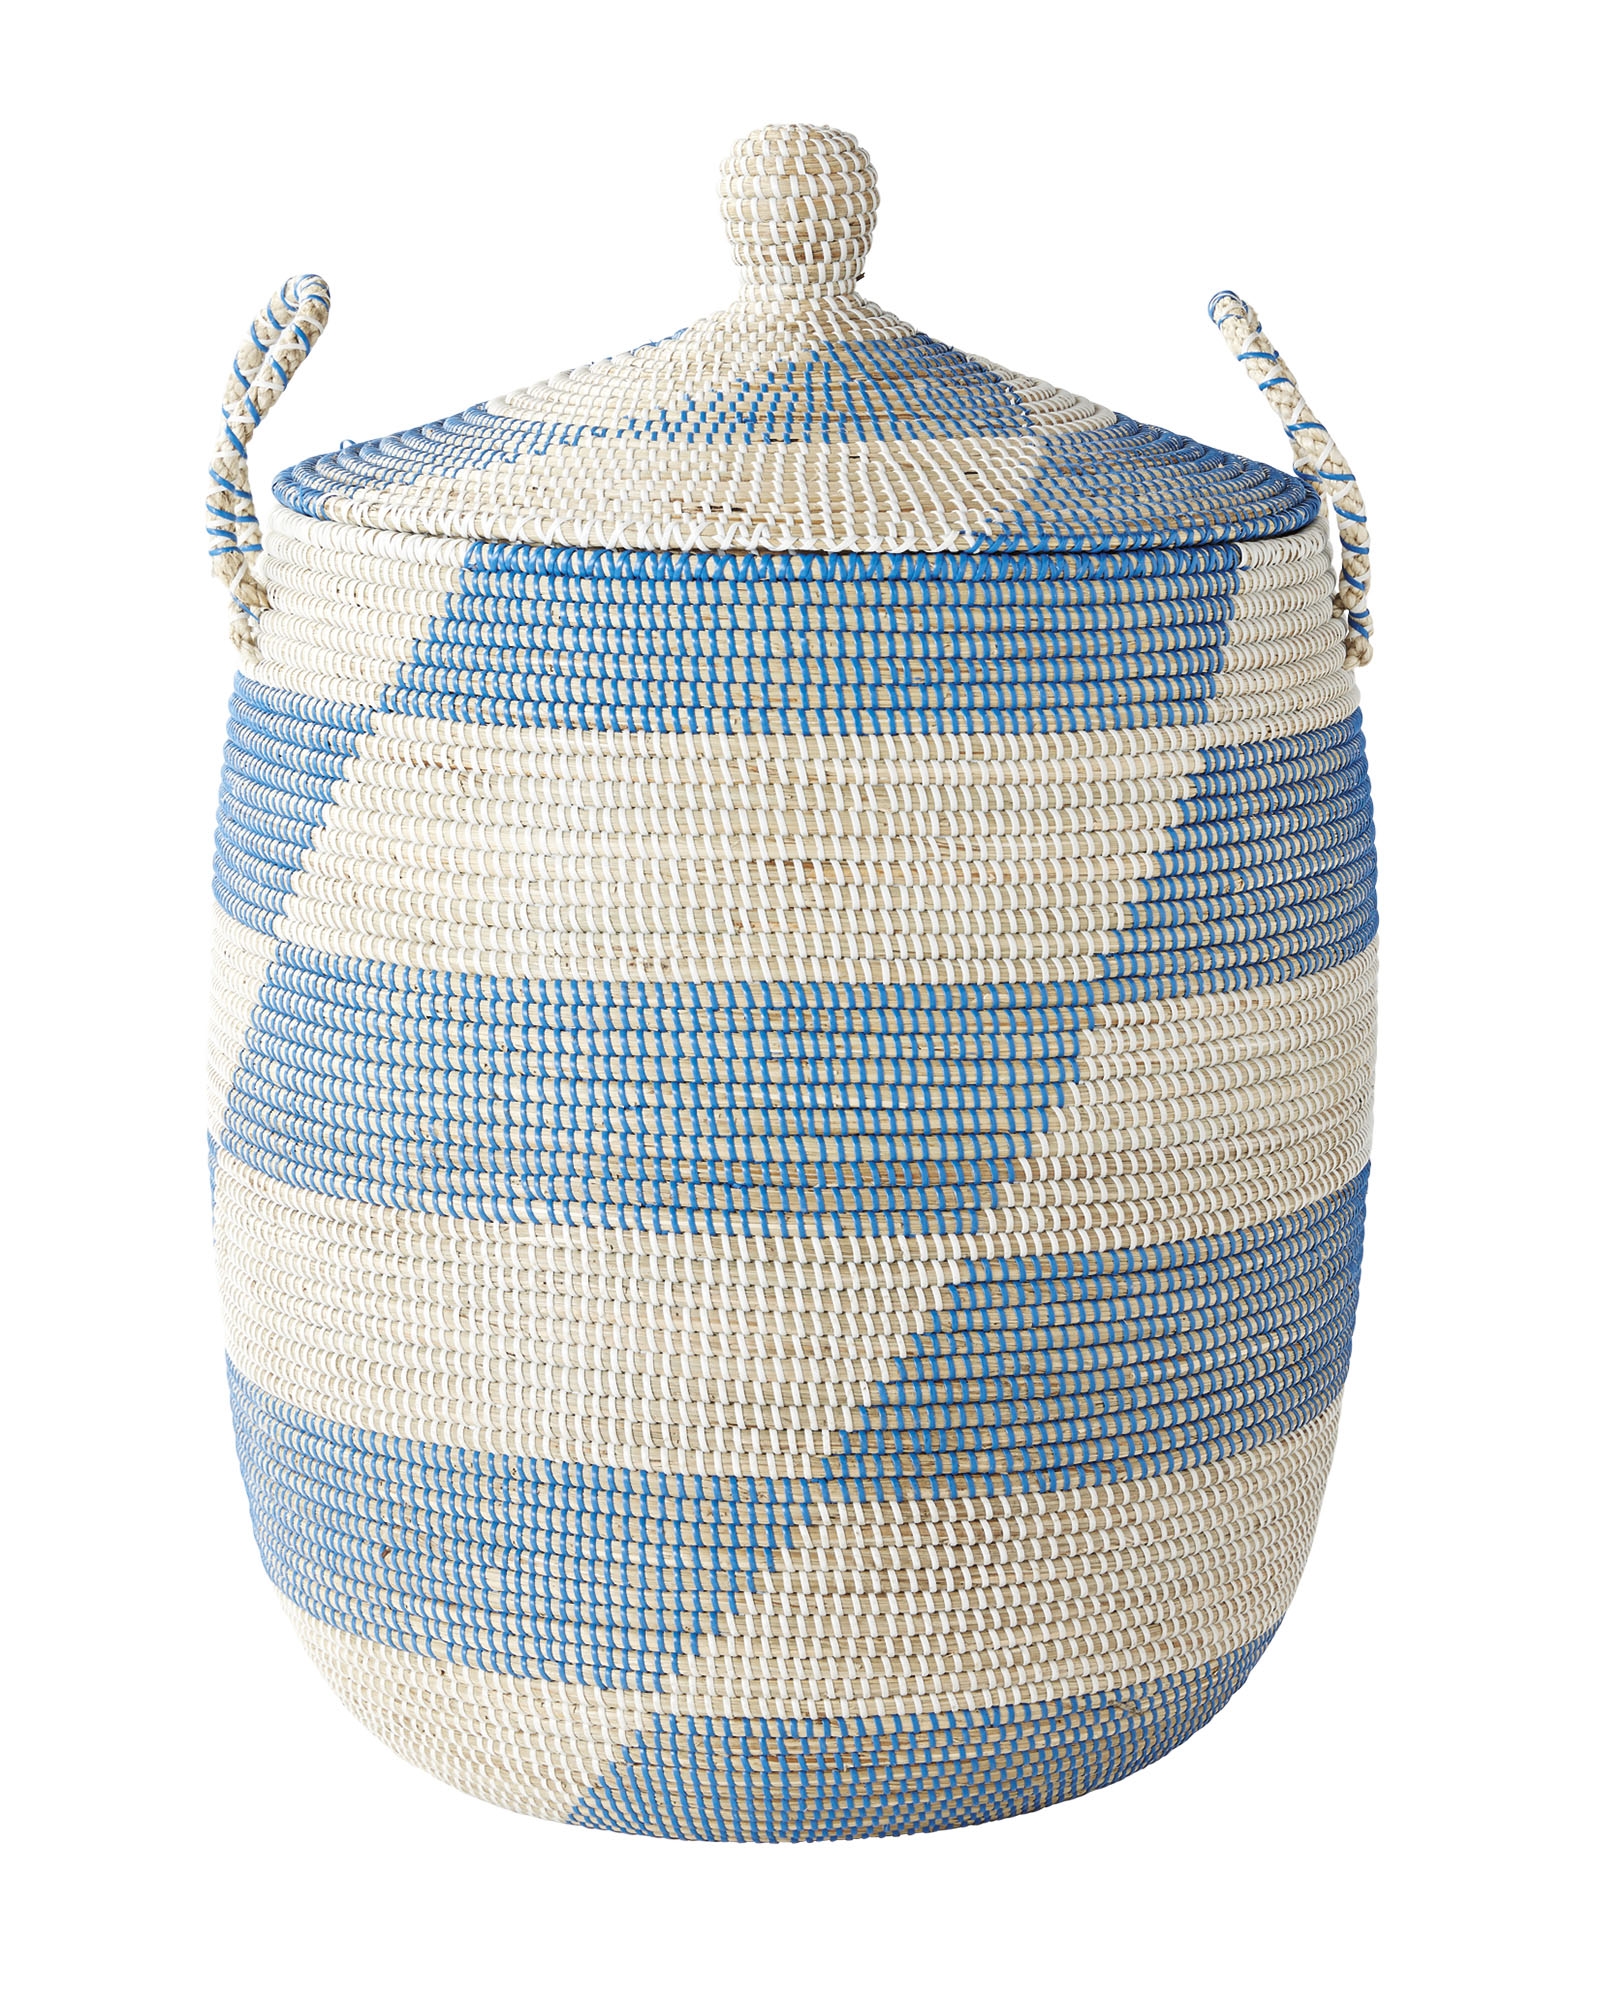 La Jolla Basket - Blue Large - Image 0